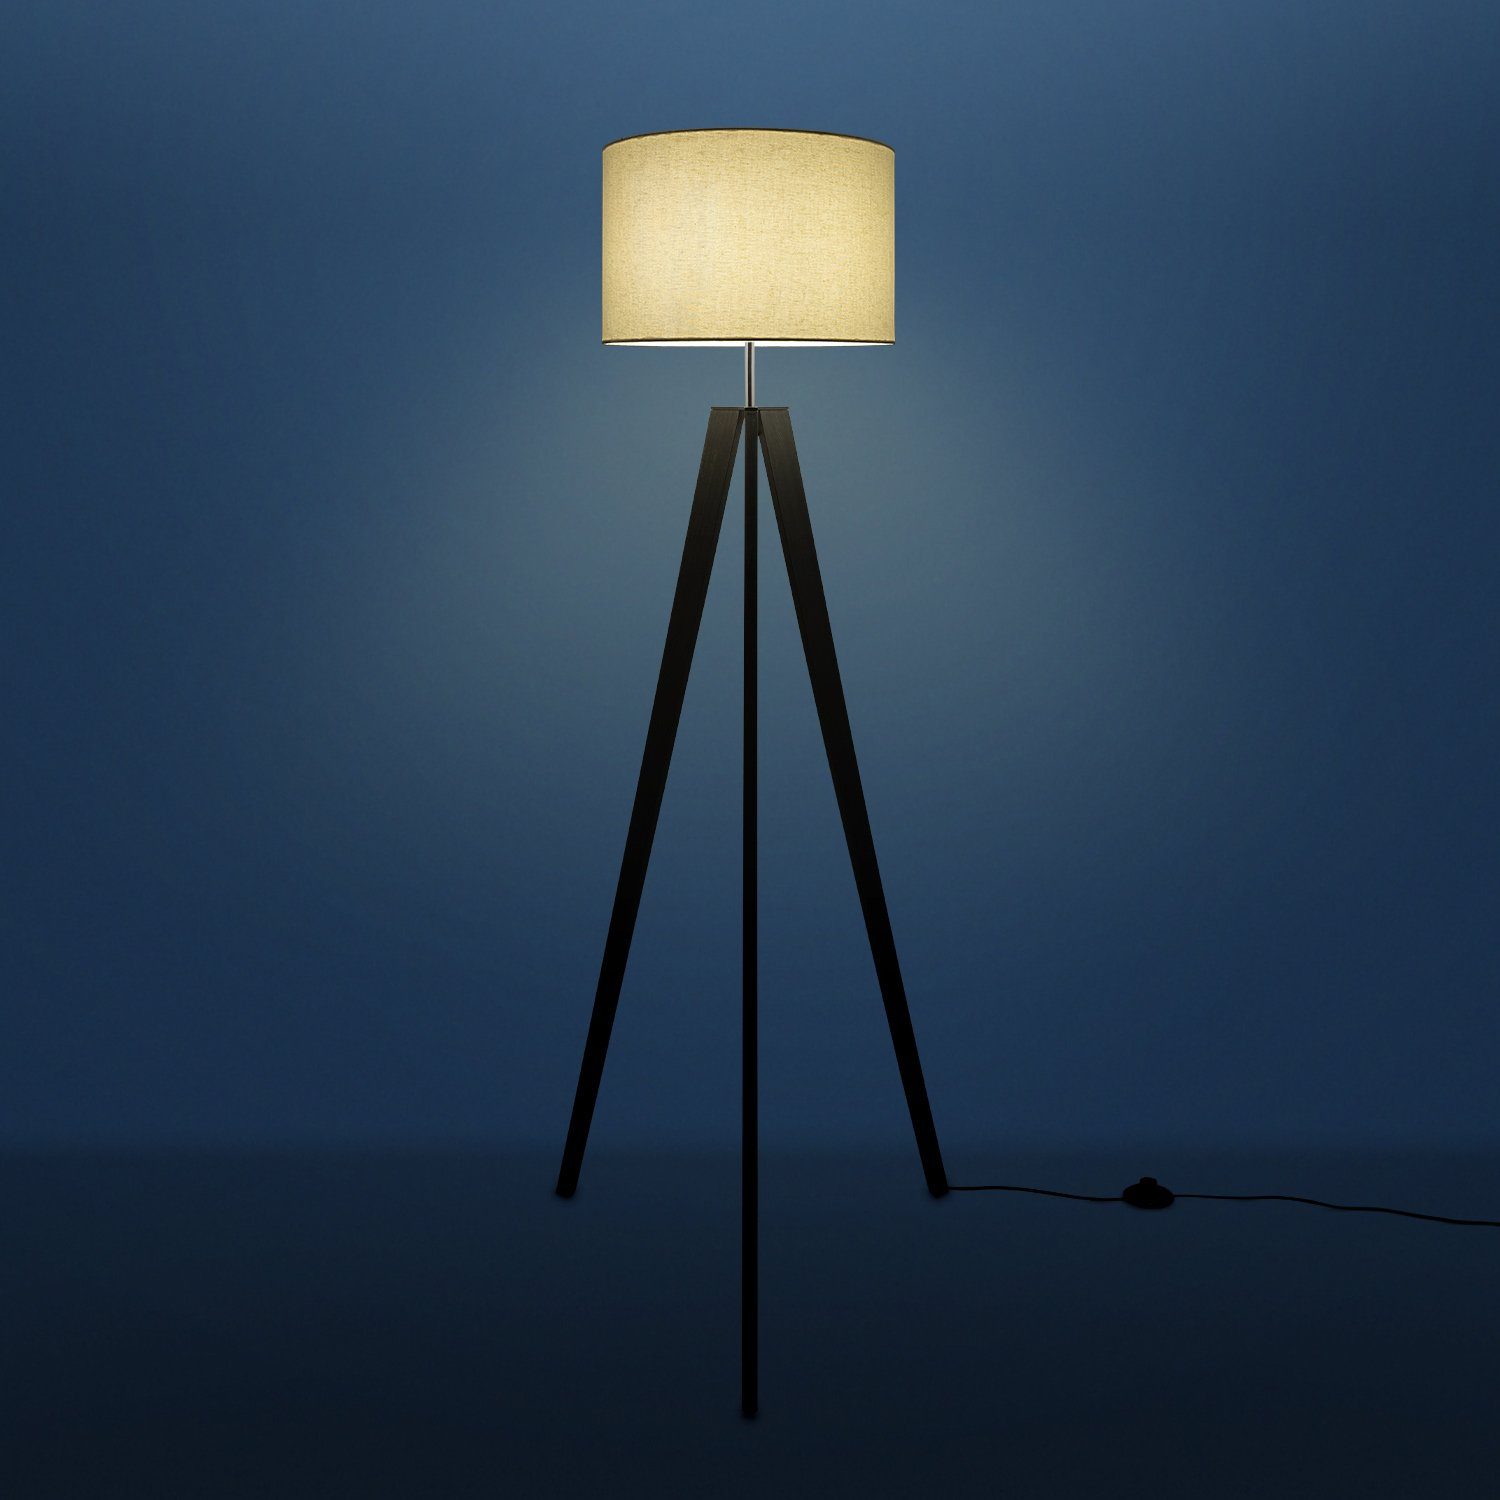 Paco Home Stehlampe Stil LED Color, Stehlampe Skandinavischer Lampe Canvas Vintage uni Fuß Leuchtmittel, E27 Wohnzimmer ohne